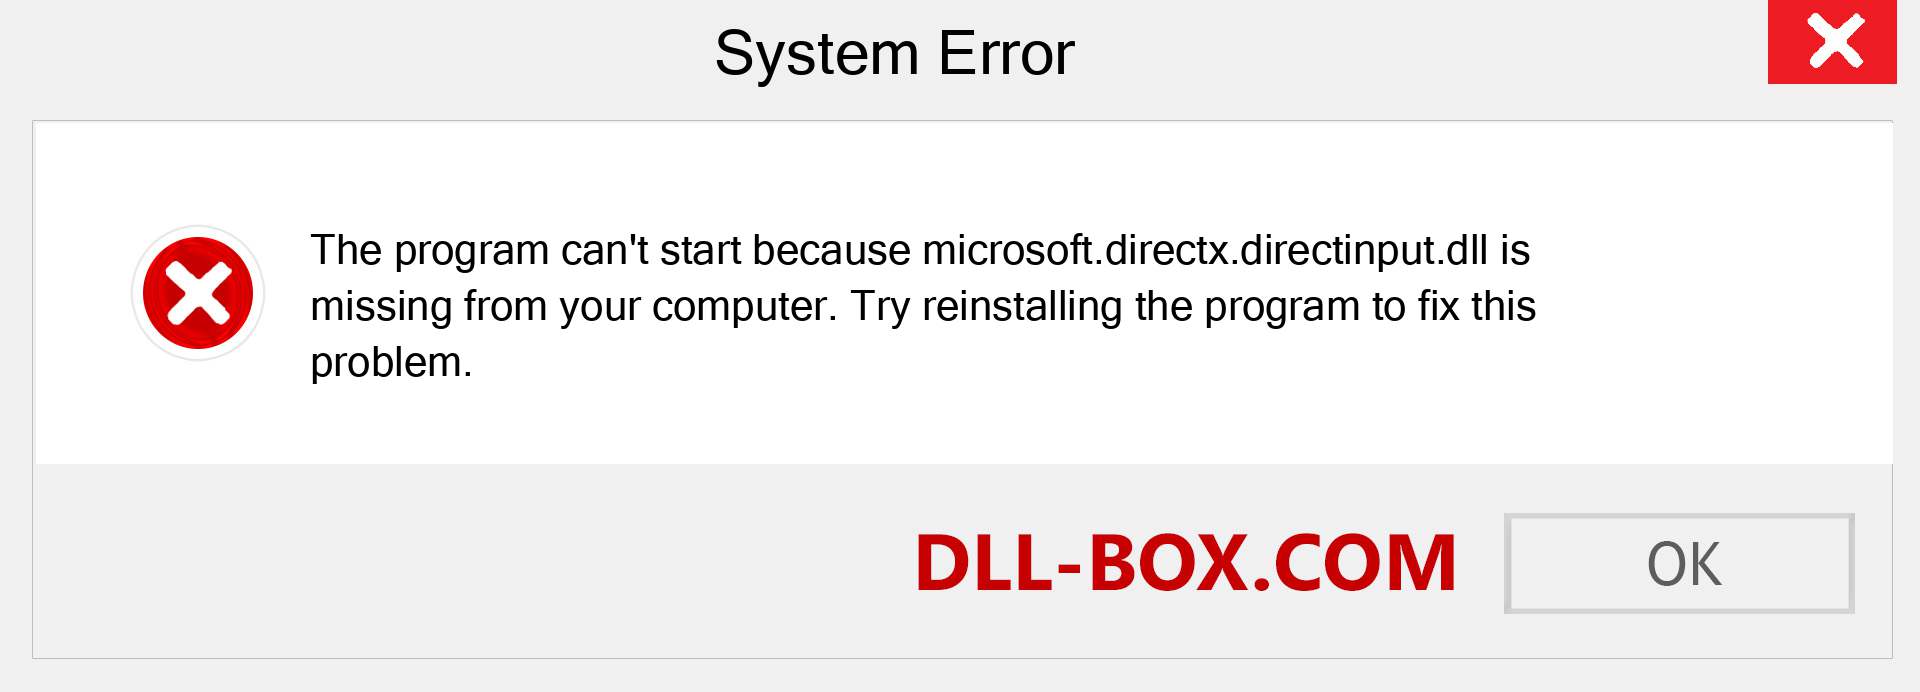  microsoft.directx.directinput.dll file is missing?. Download for Windows 7, 8, 10 - Fix  microsoft.directx.directinput dll Missing Error on Windows, photos, images